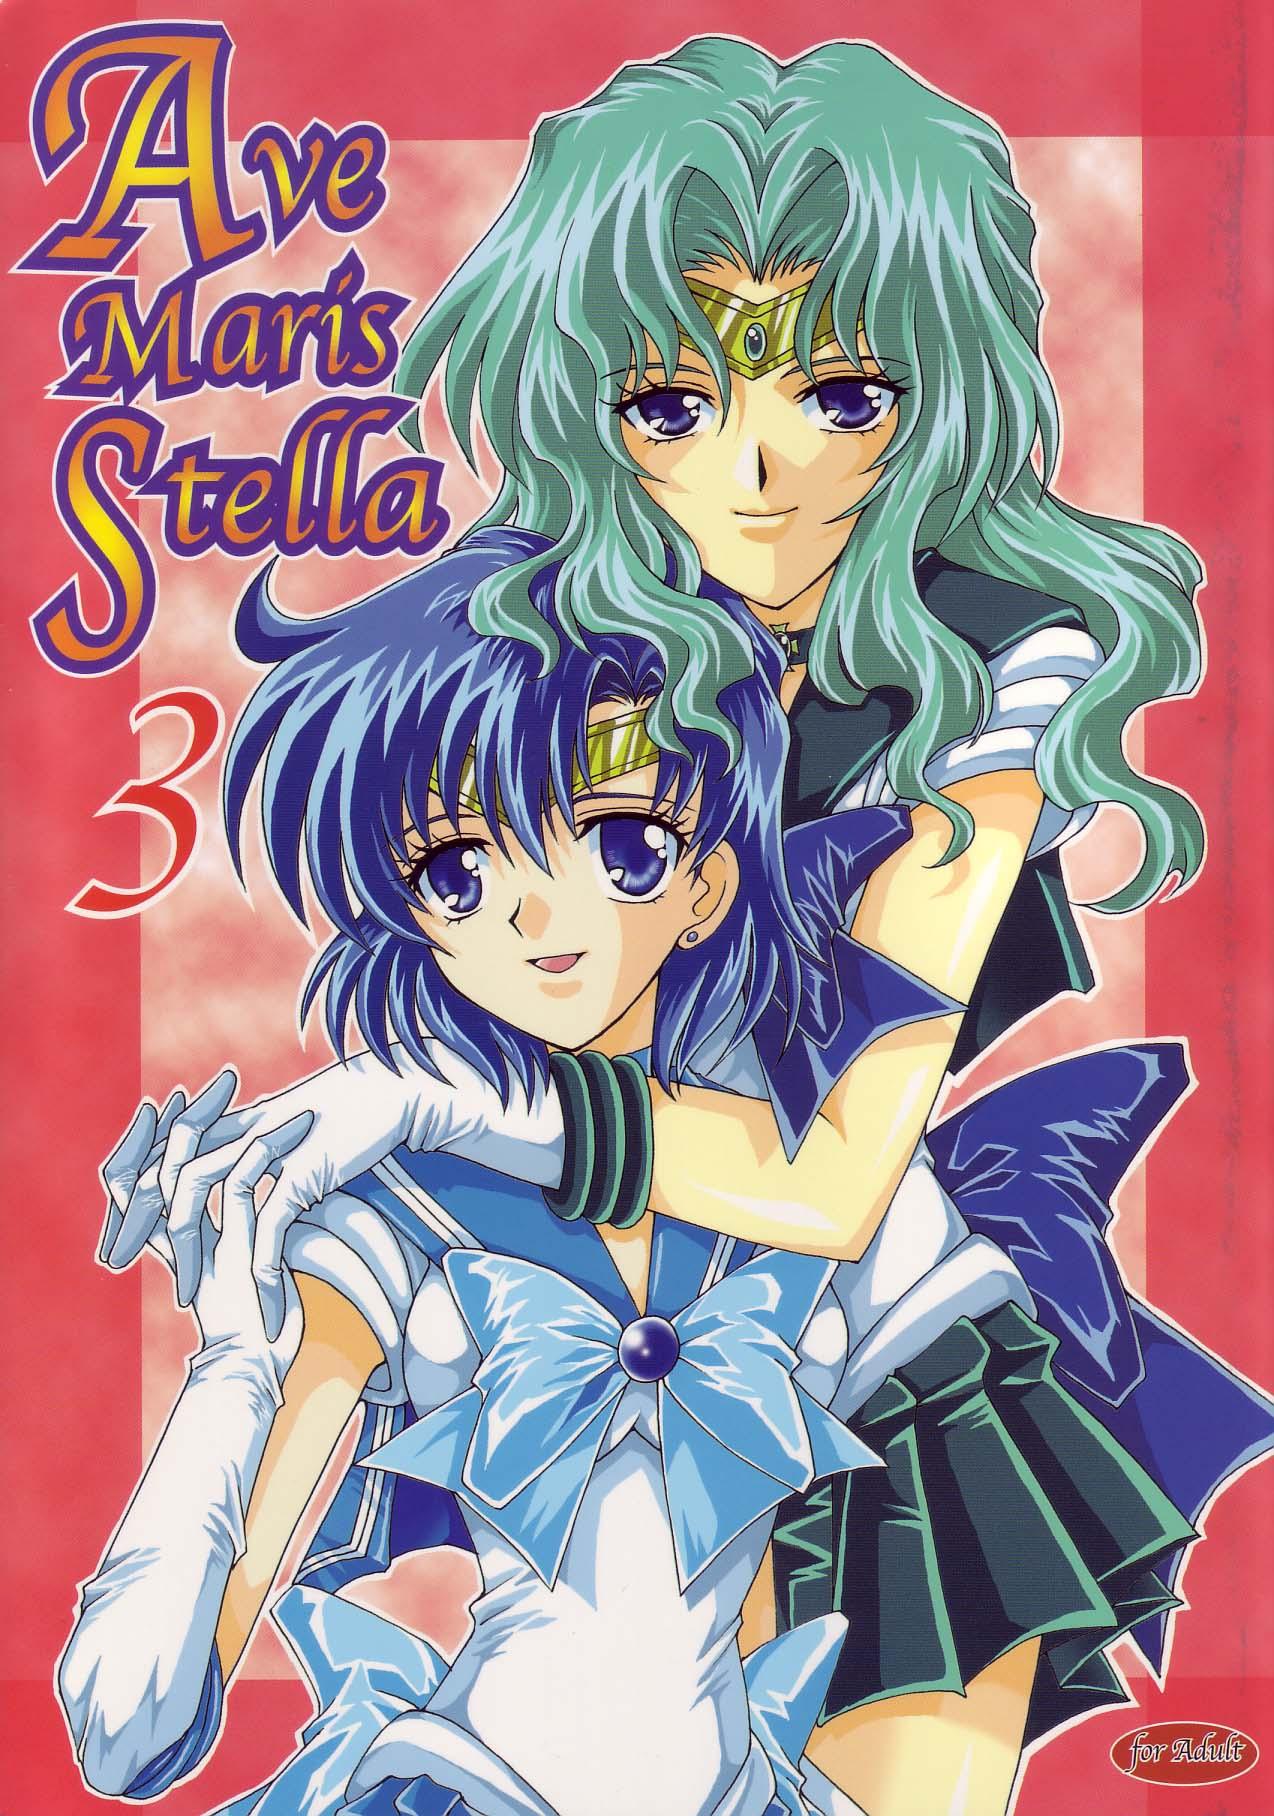 Gay Spank Ave Maris Stella 3 - Sailor moon Full - Picture 1